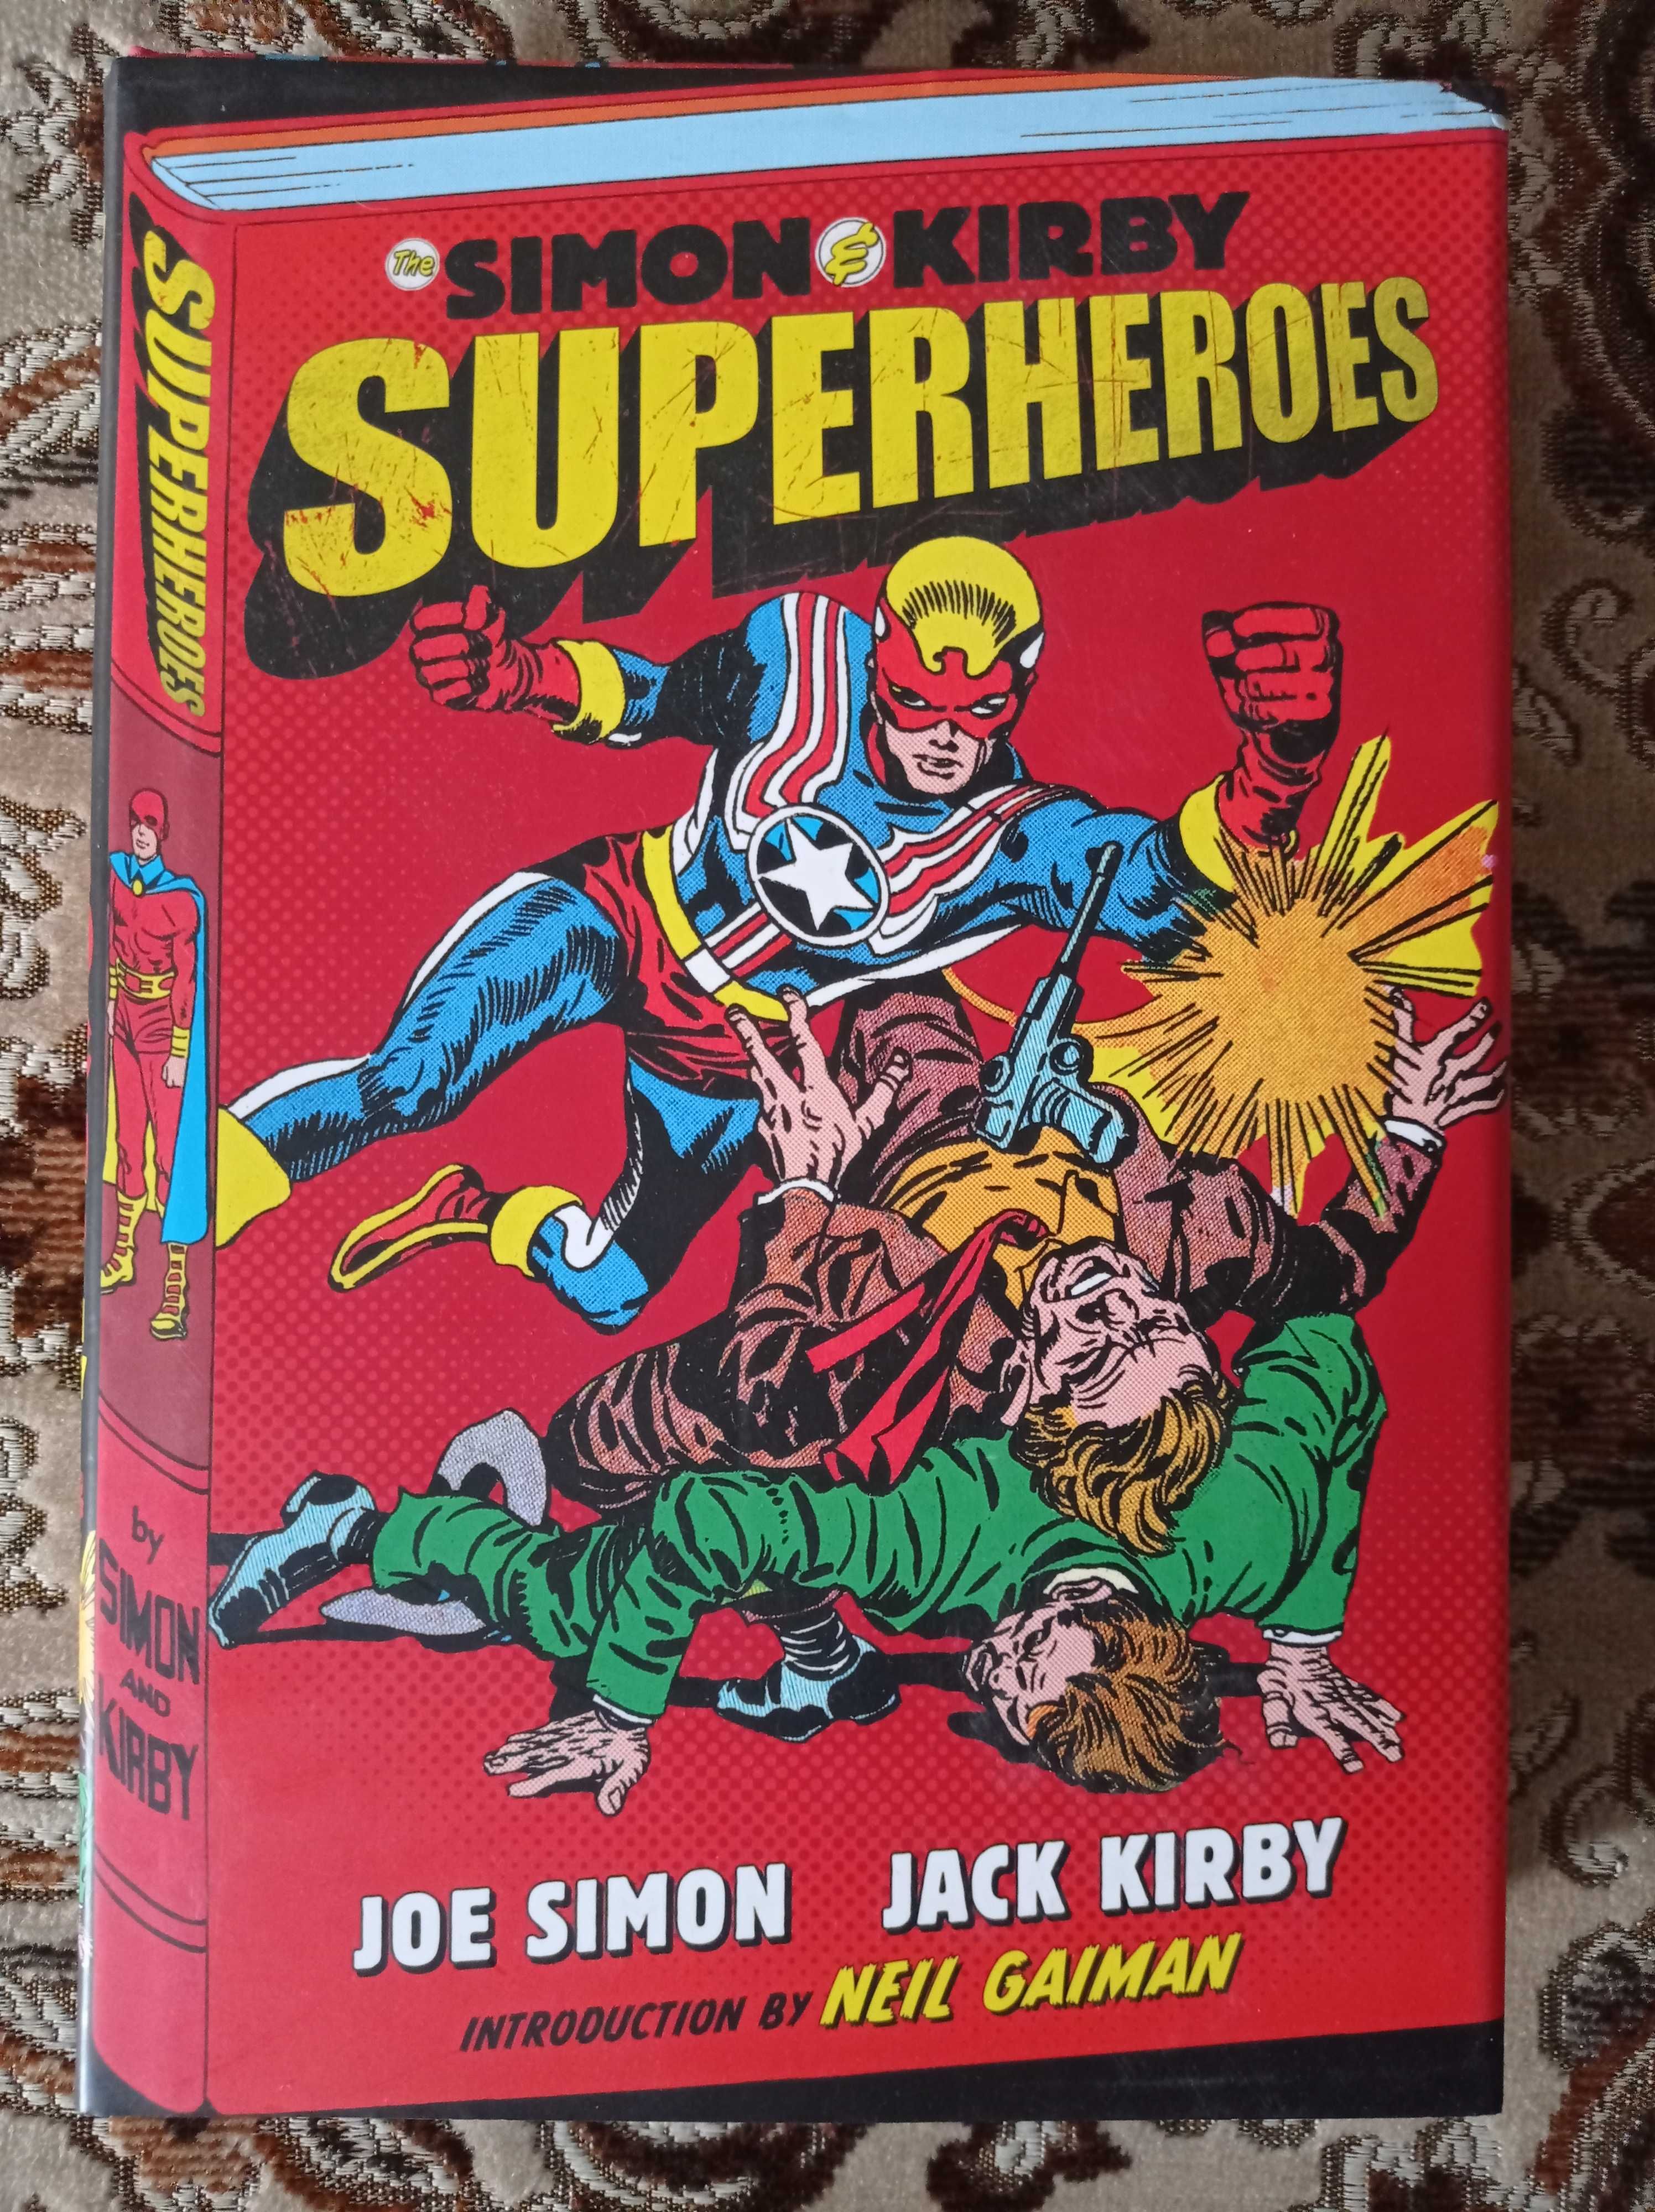 Simon and Kirby Superheroes album zbiorczy